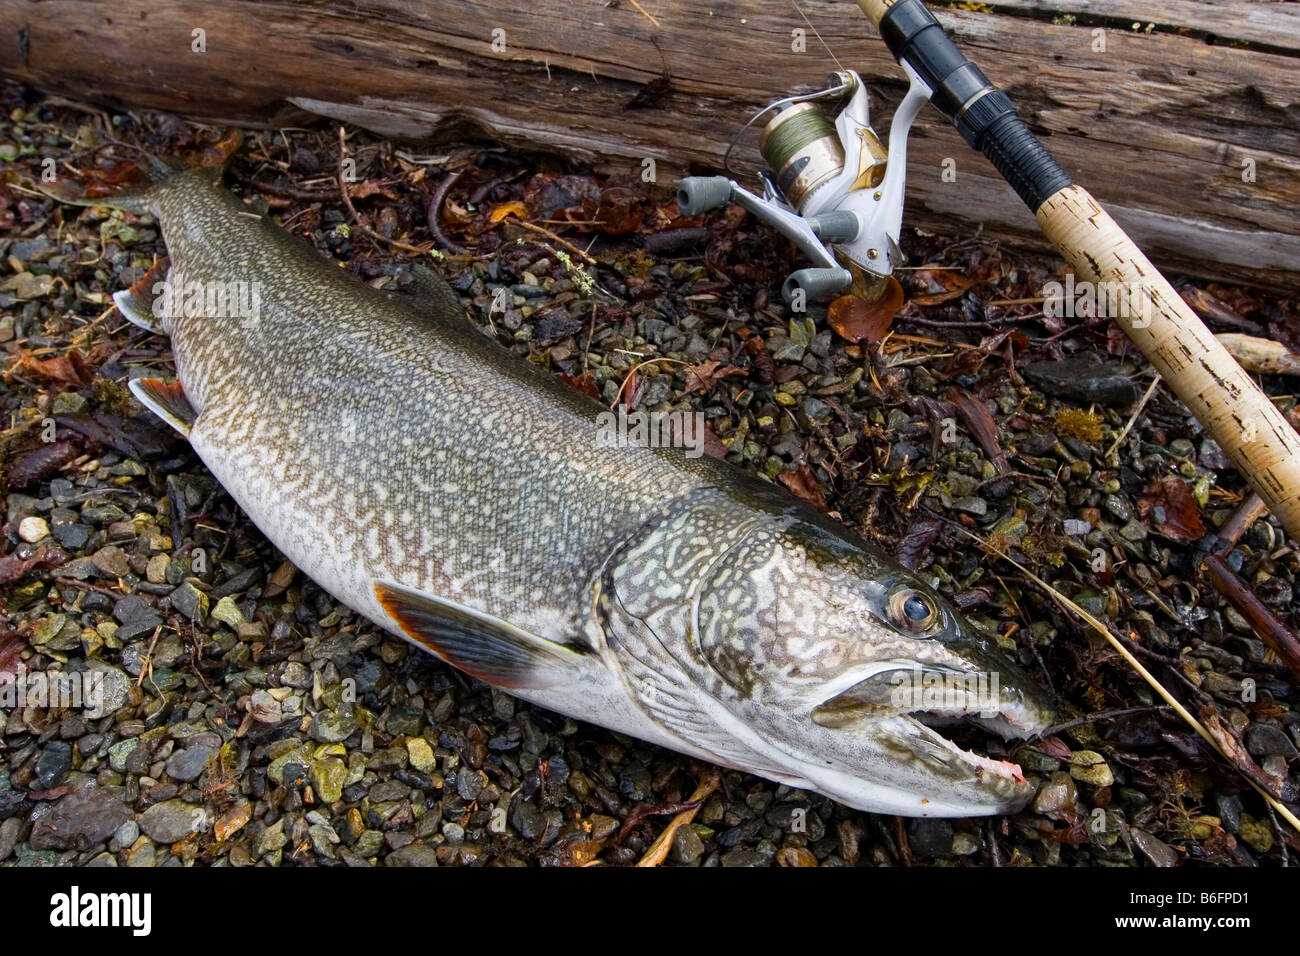 Fisherman's catch, trophy Lake Trout (Salvelinus namaycush